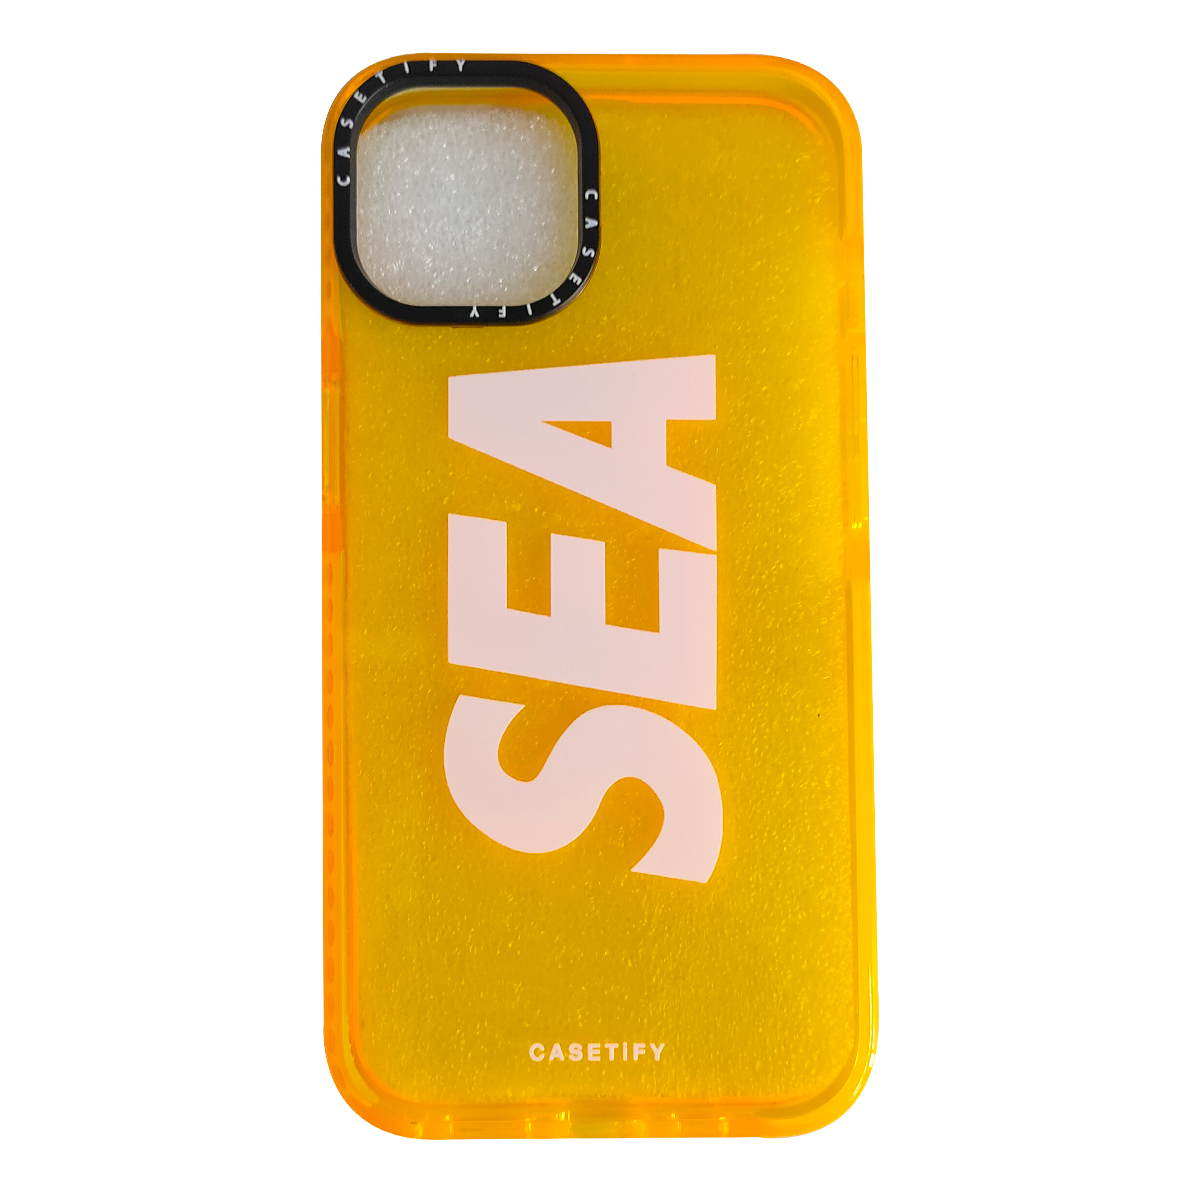 Casetify Sea Cases for iPhone 12/12 Pro (Orange)